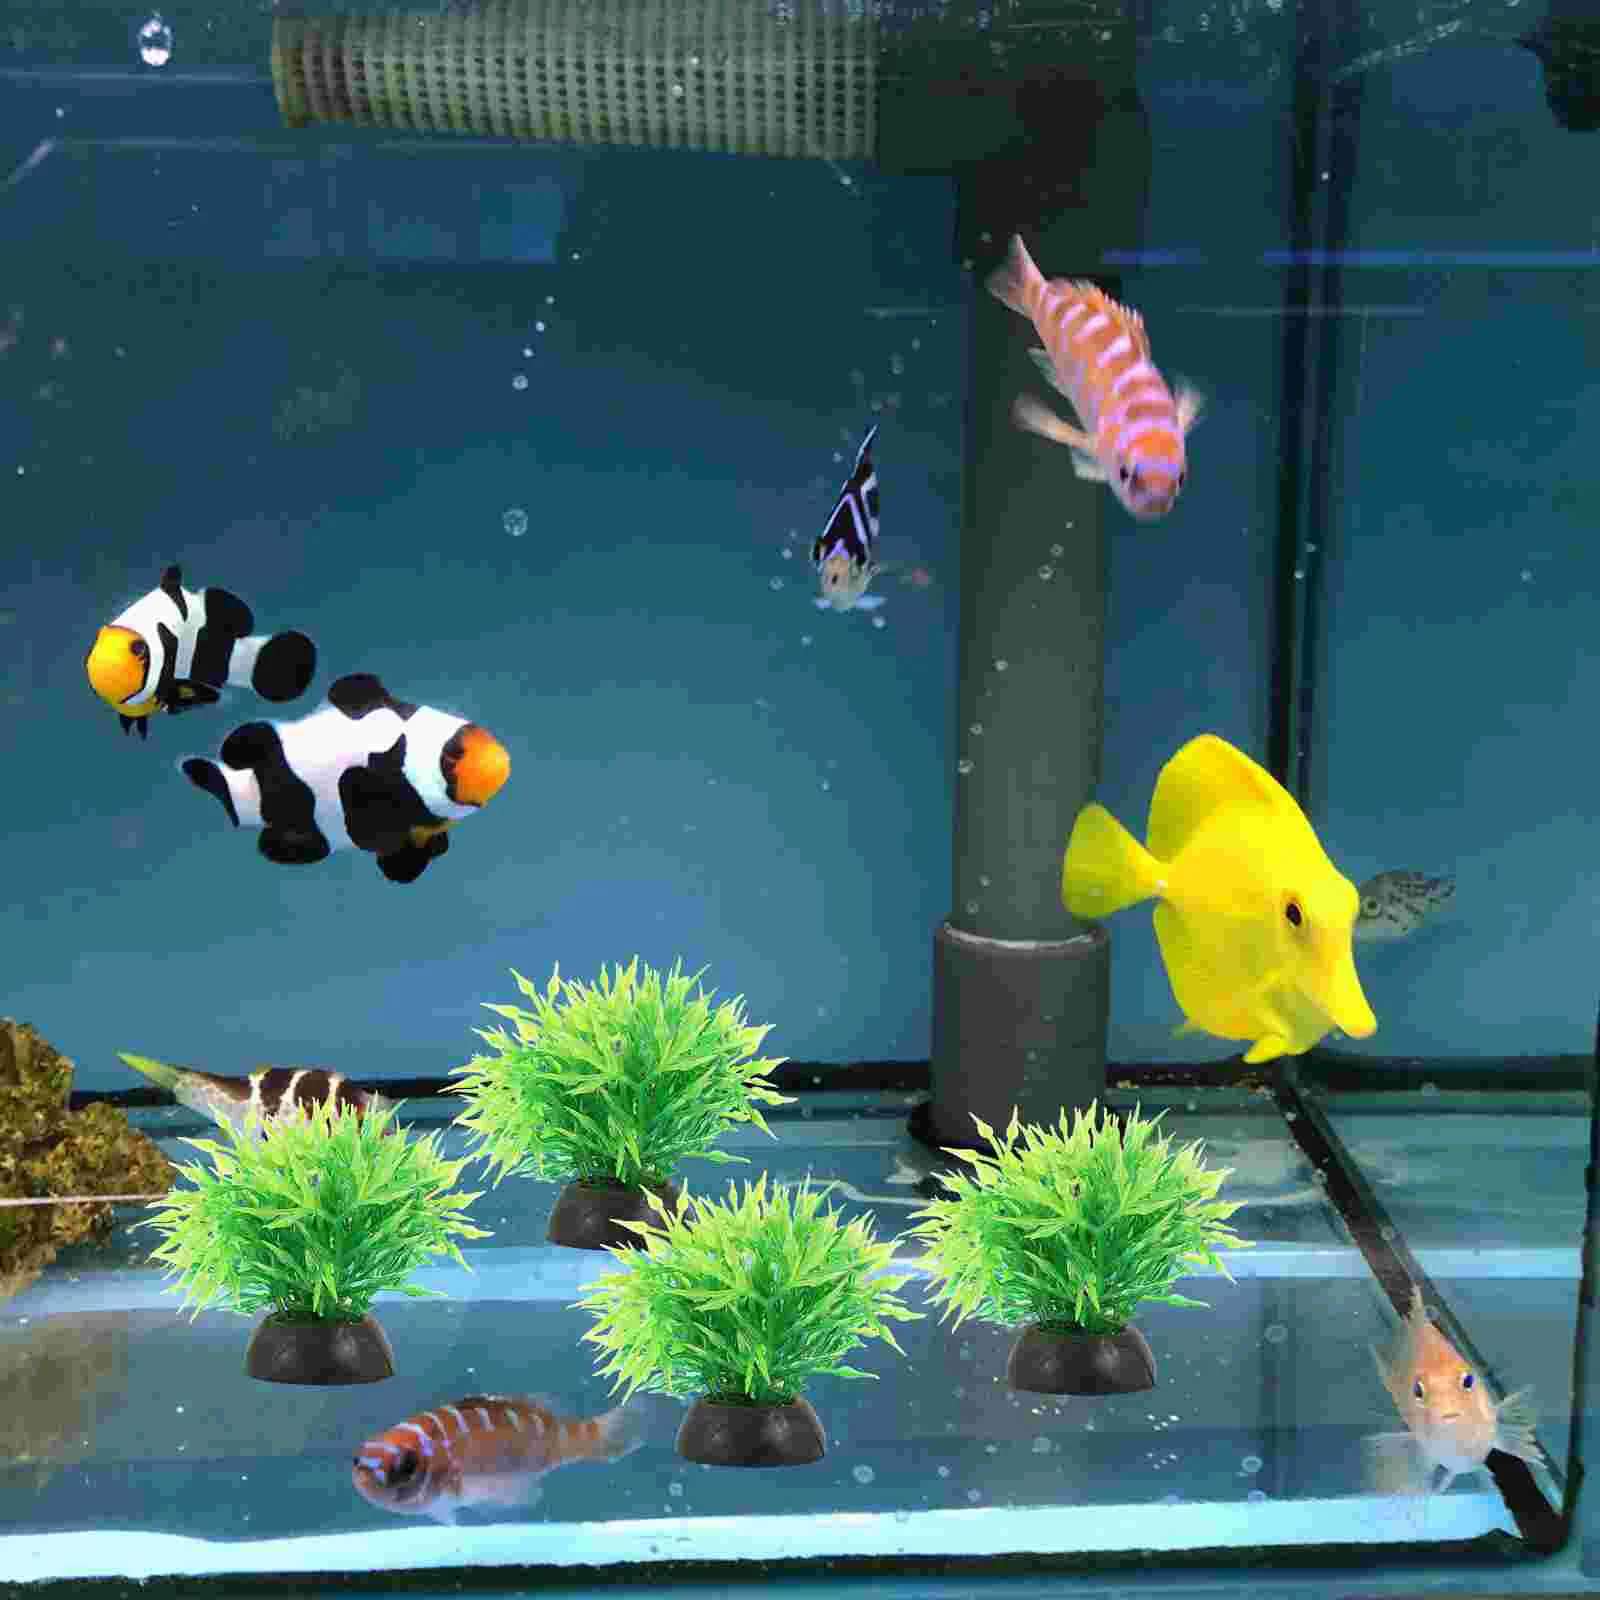 

20 Pcs Aquarium Landscaping Plastic Fish Tank Plants Aquatic Freshwater Decorate Tall Betta Decorations Small